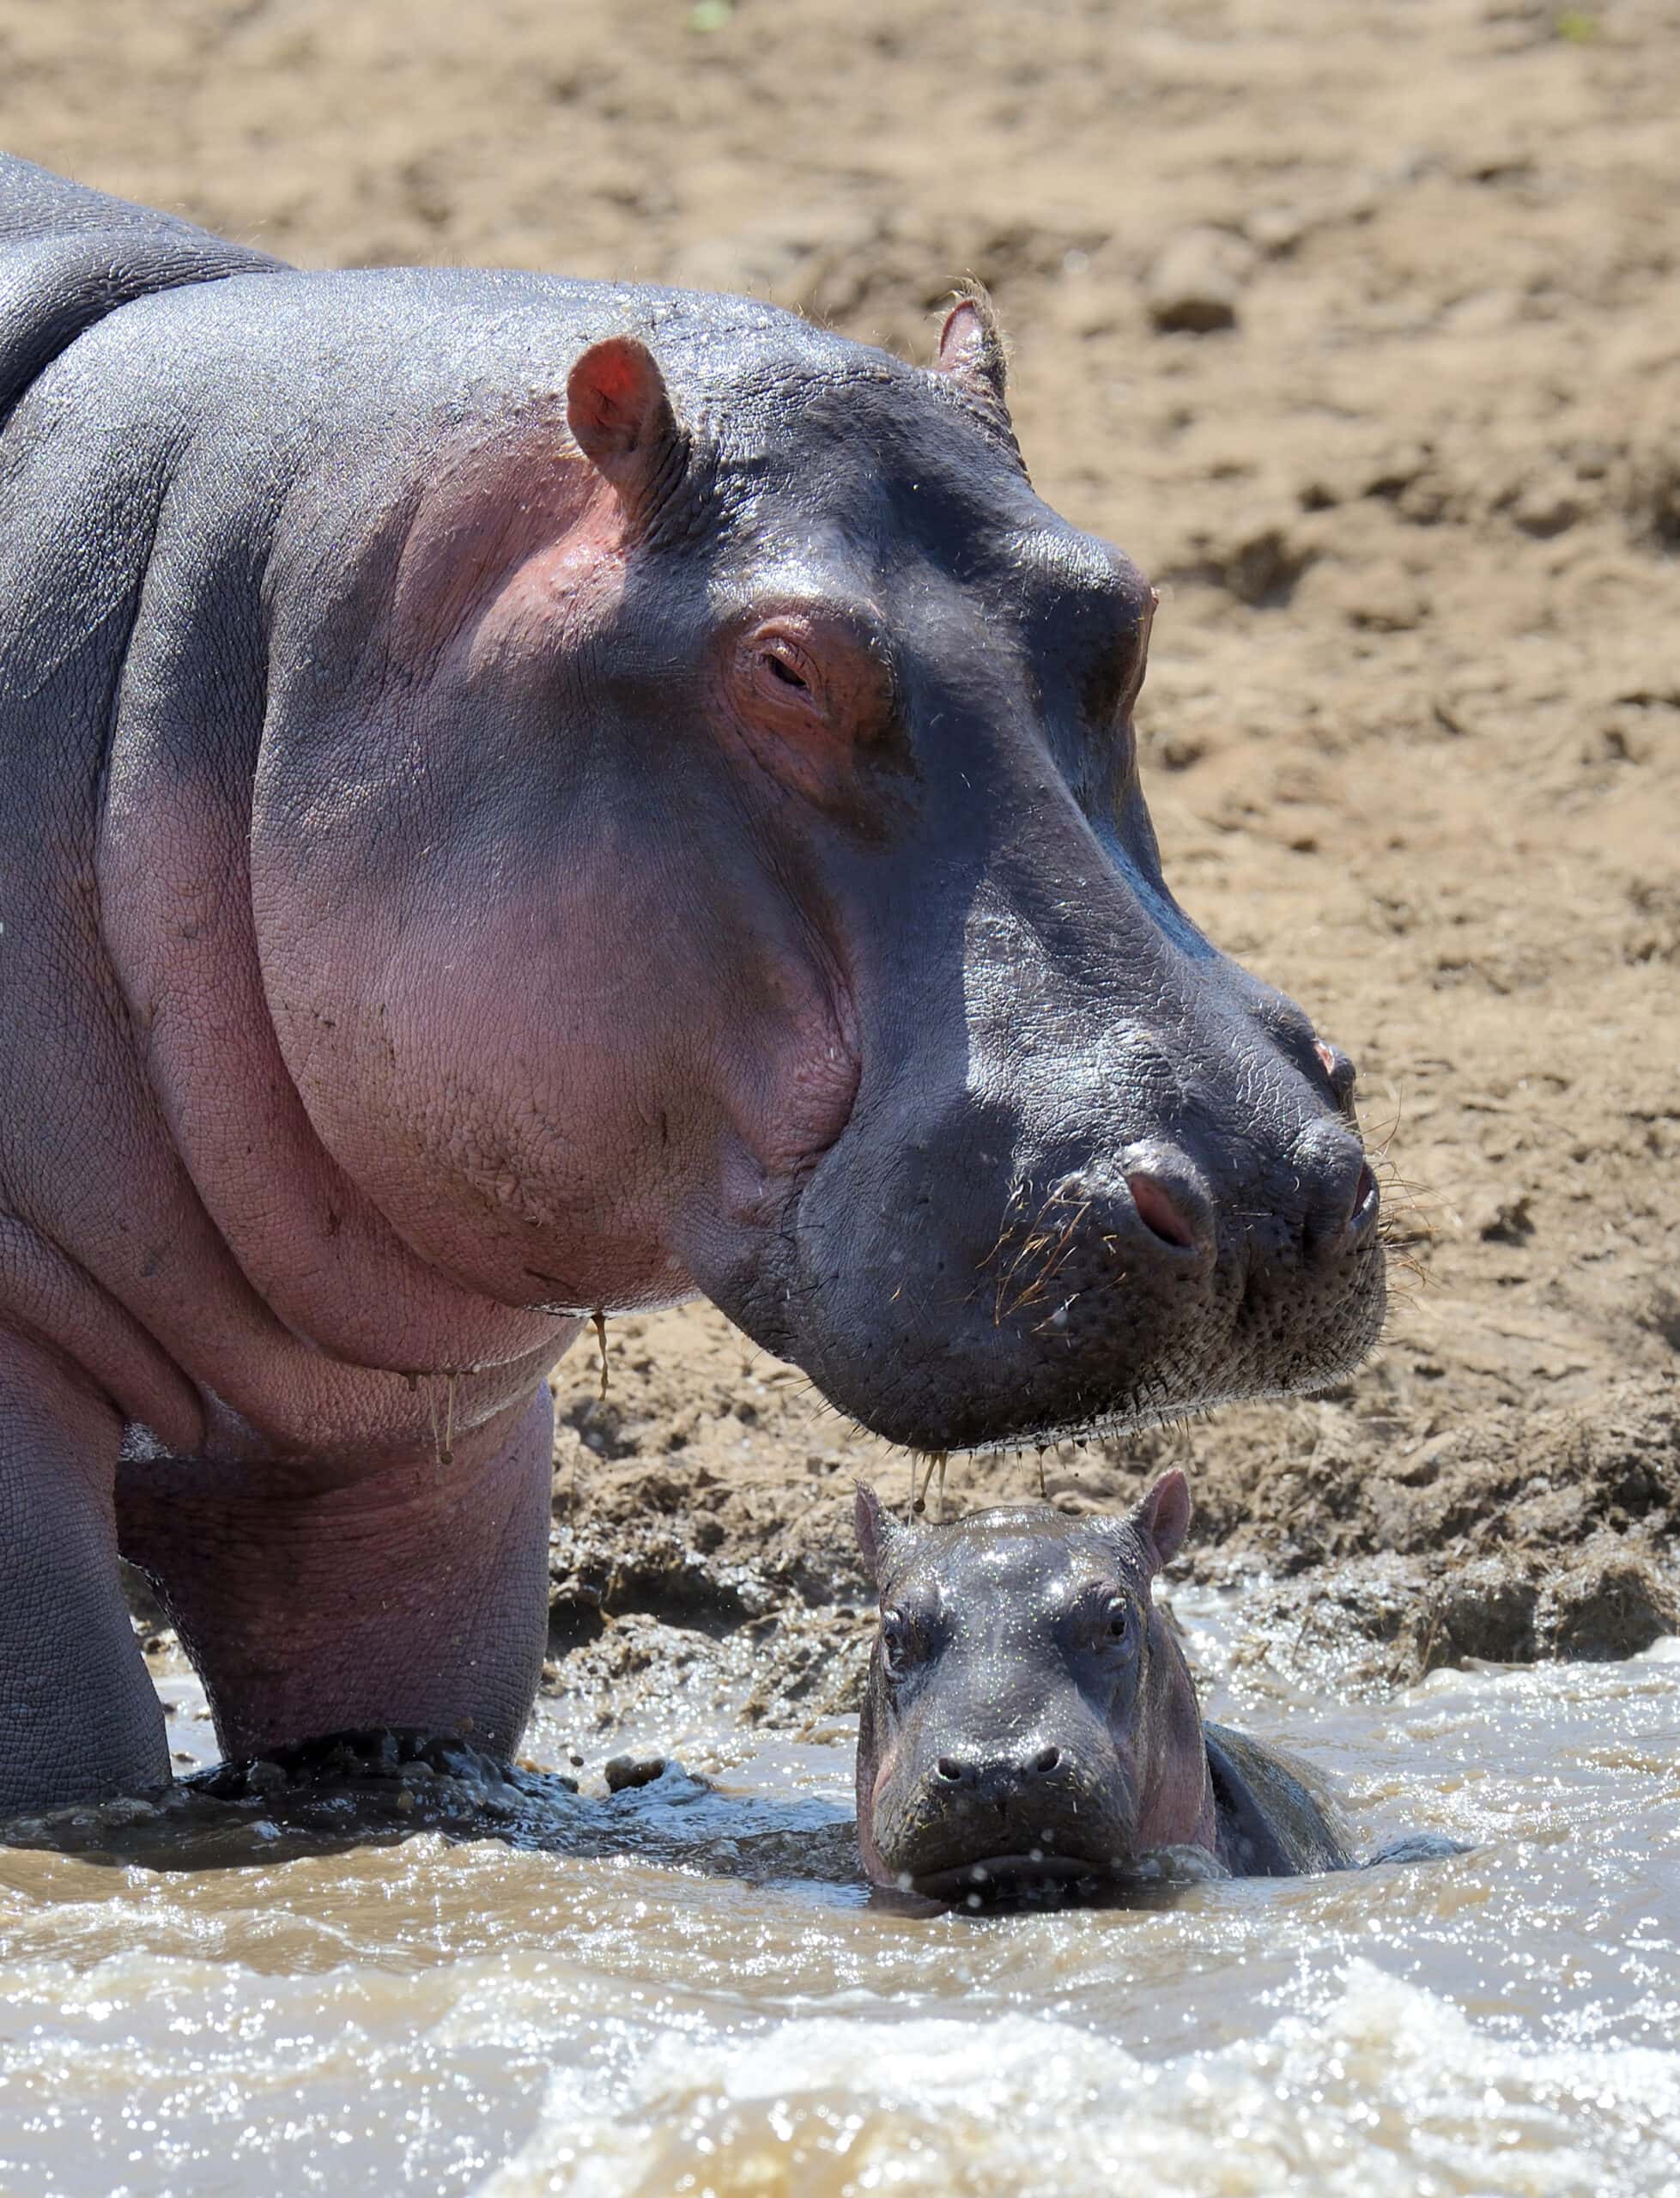 hippo family kenya africa 2021 08 26 15 55 37 utc scaled